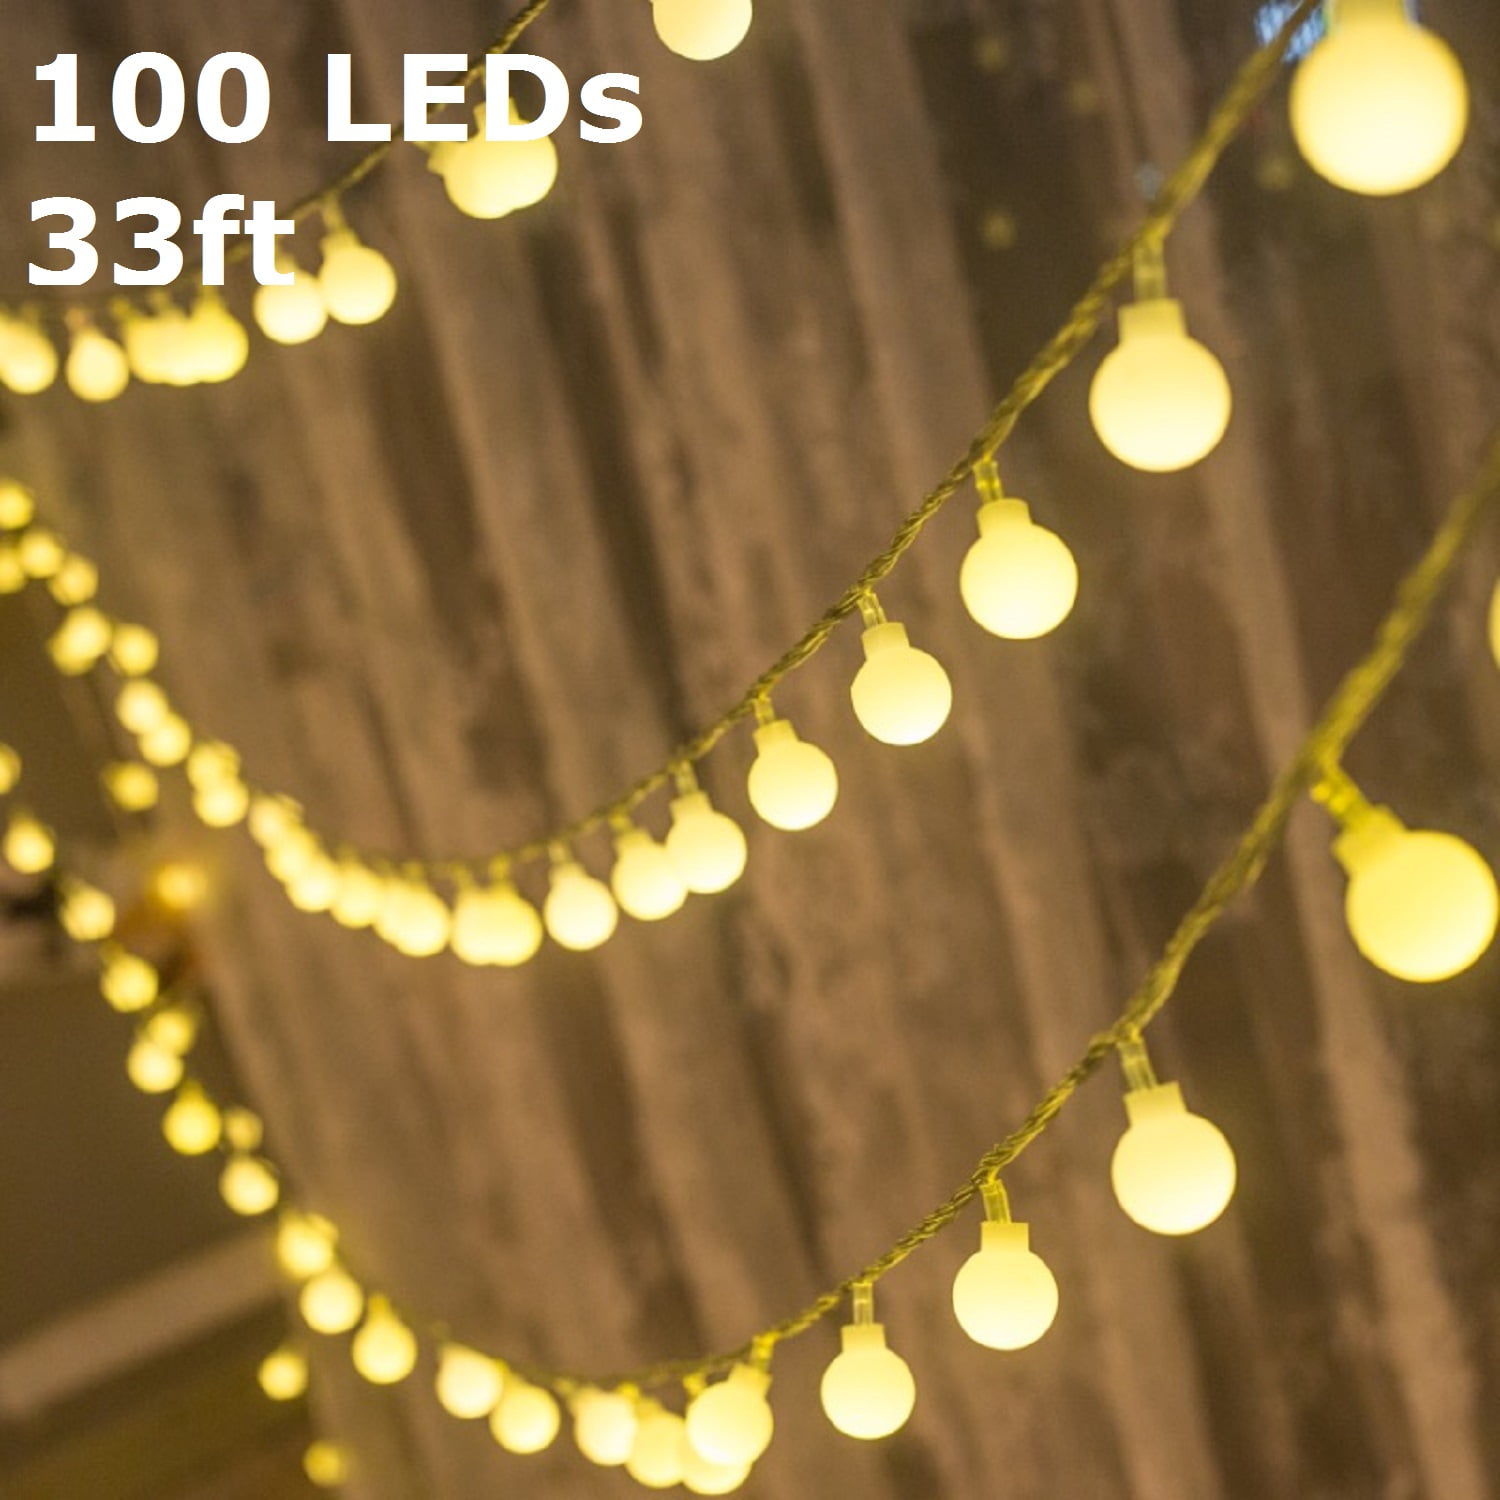 30 LED Star Solar Powered Garden Decoration String Lights for Christma YZ